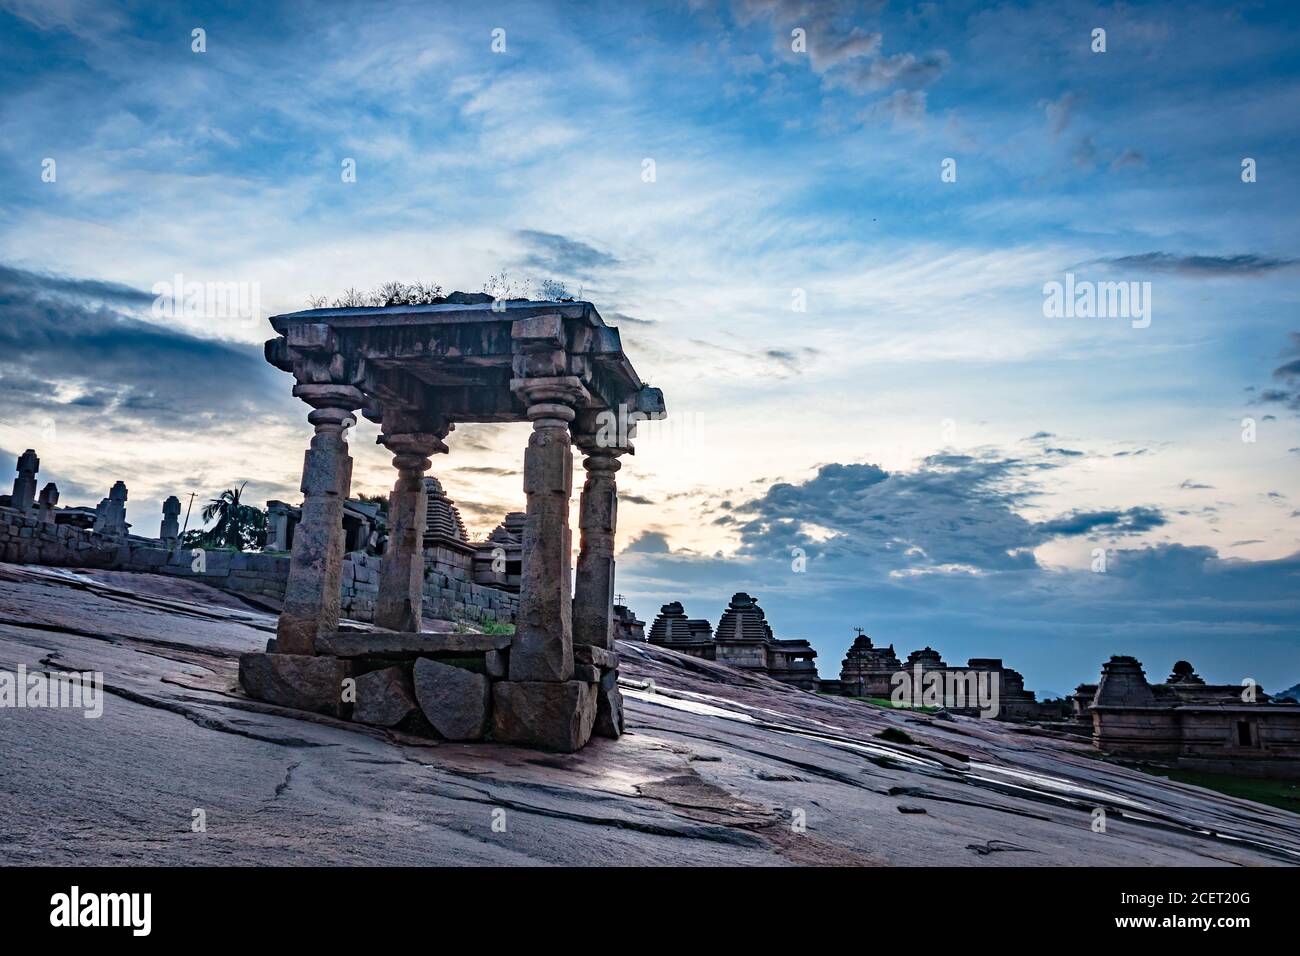 hampi ruins ancient stone art with amazing dramatic sky image is taken at hampi karnataka india. it is showing the impressive architecture in hampi. Stock Photo